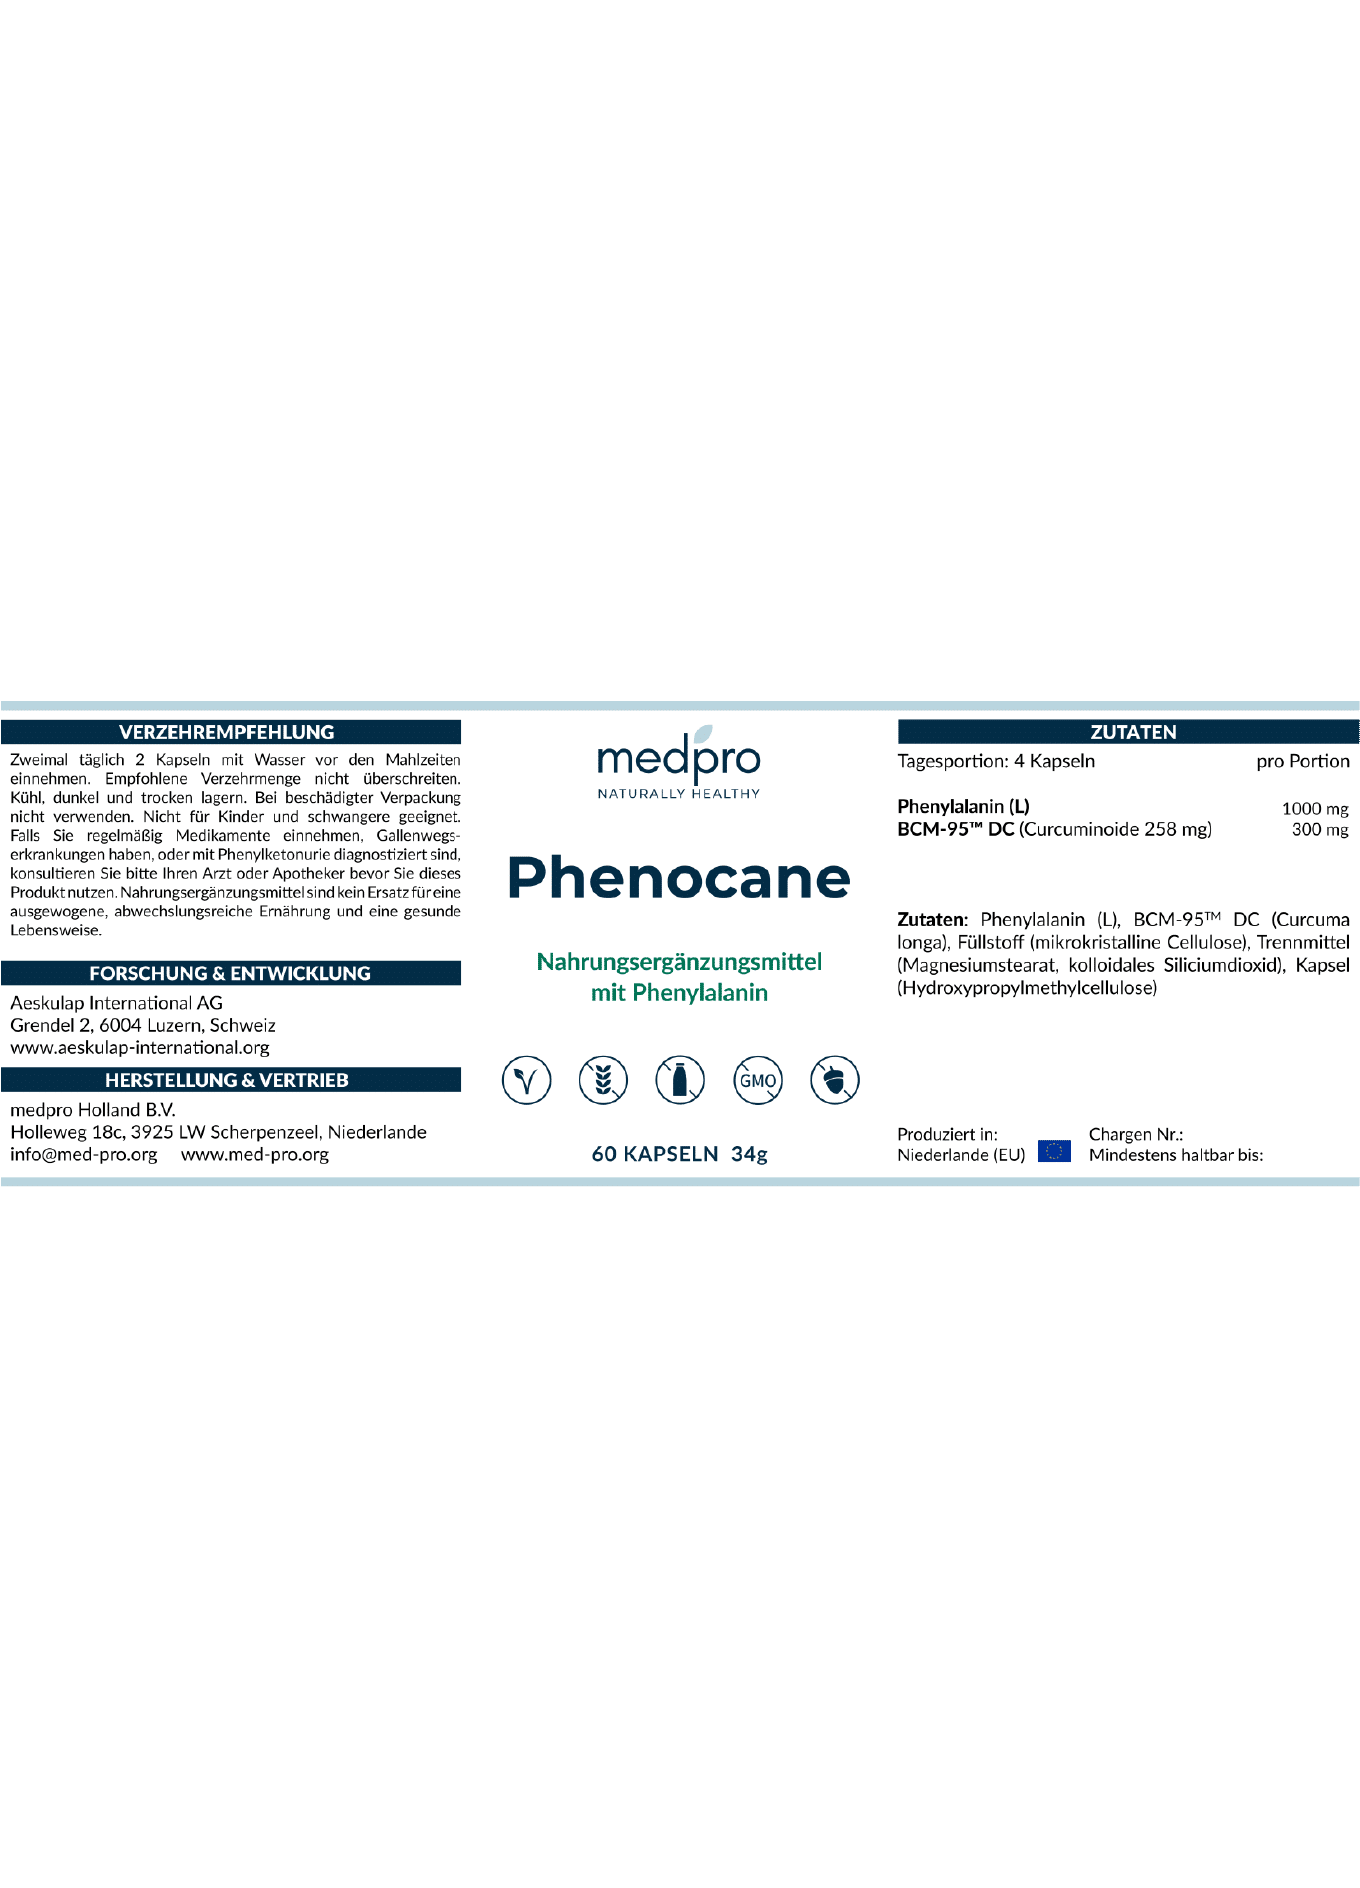 Phenocane label